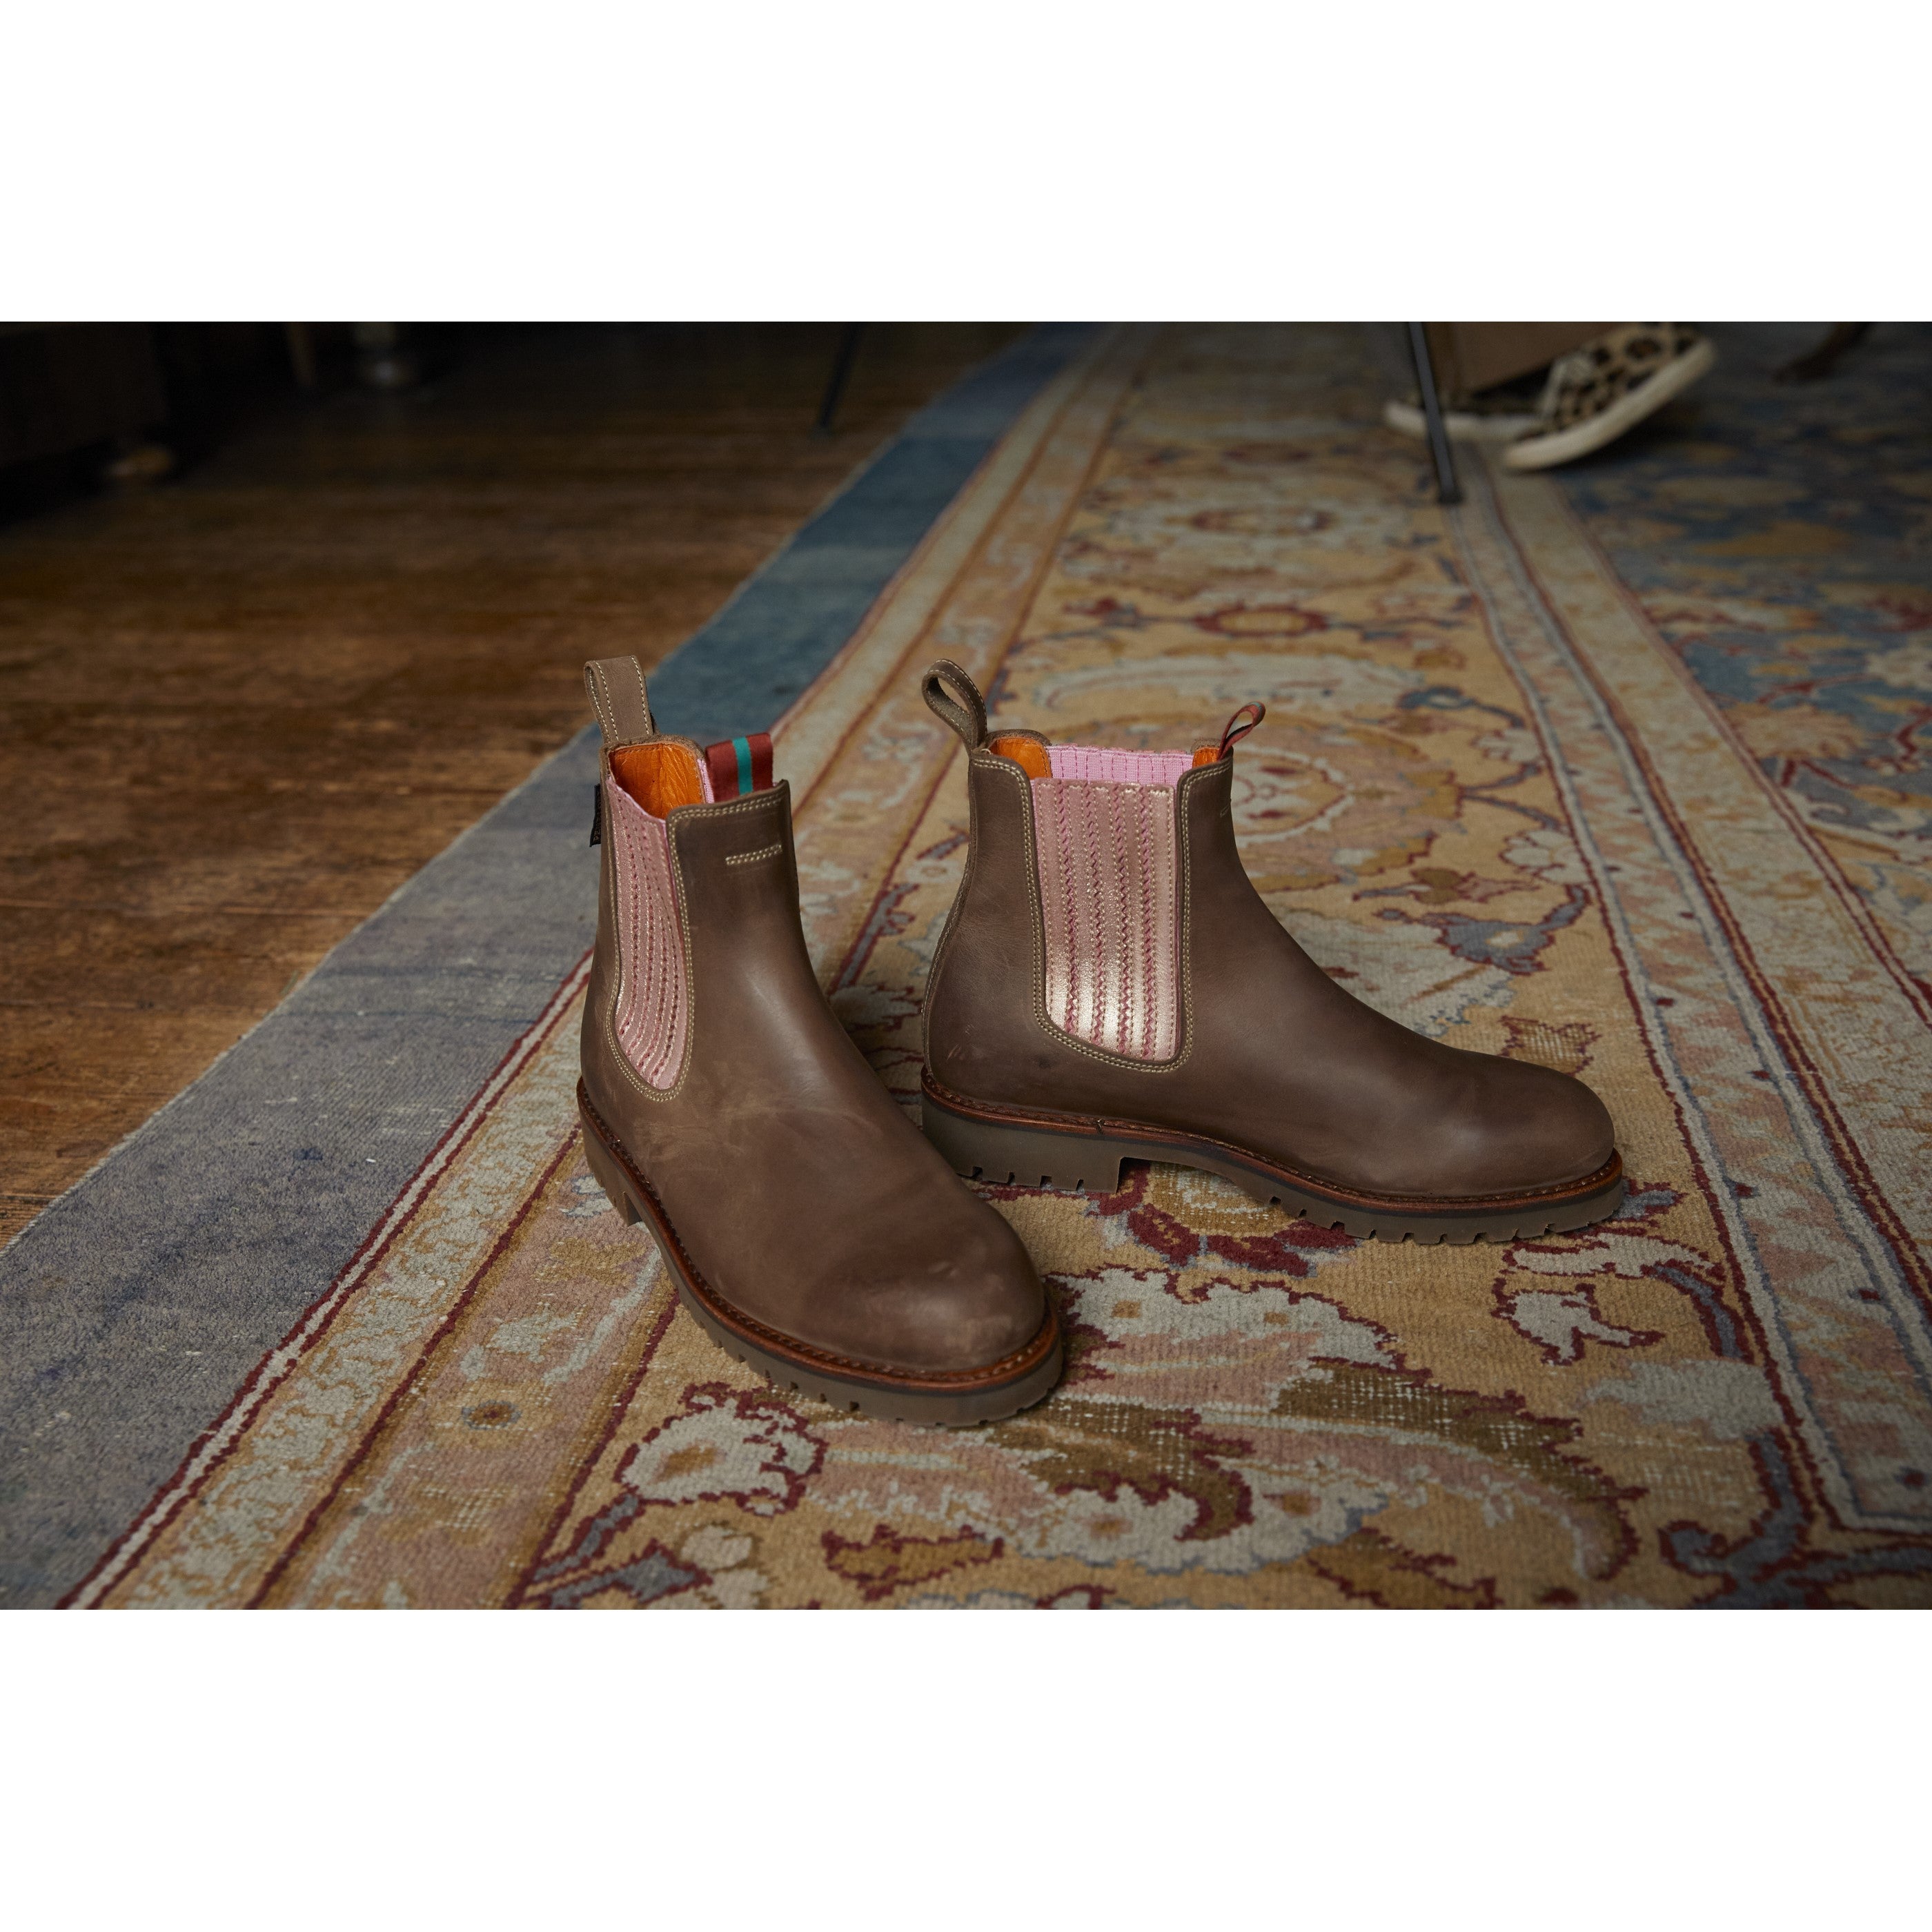 Penelope Chilvers Oscar Ladies Leather Boots - Khaki/Tea Rose